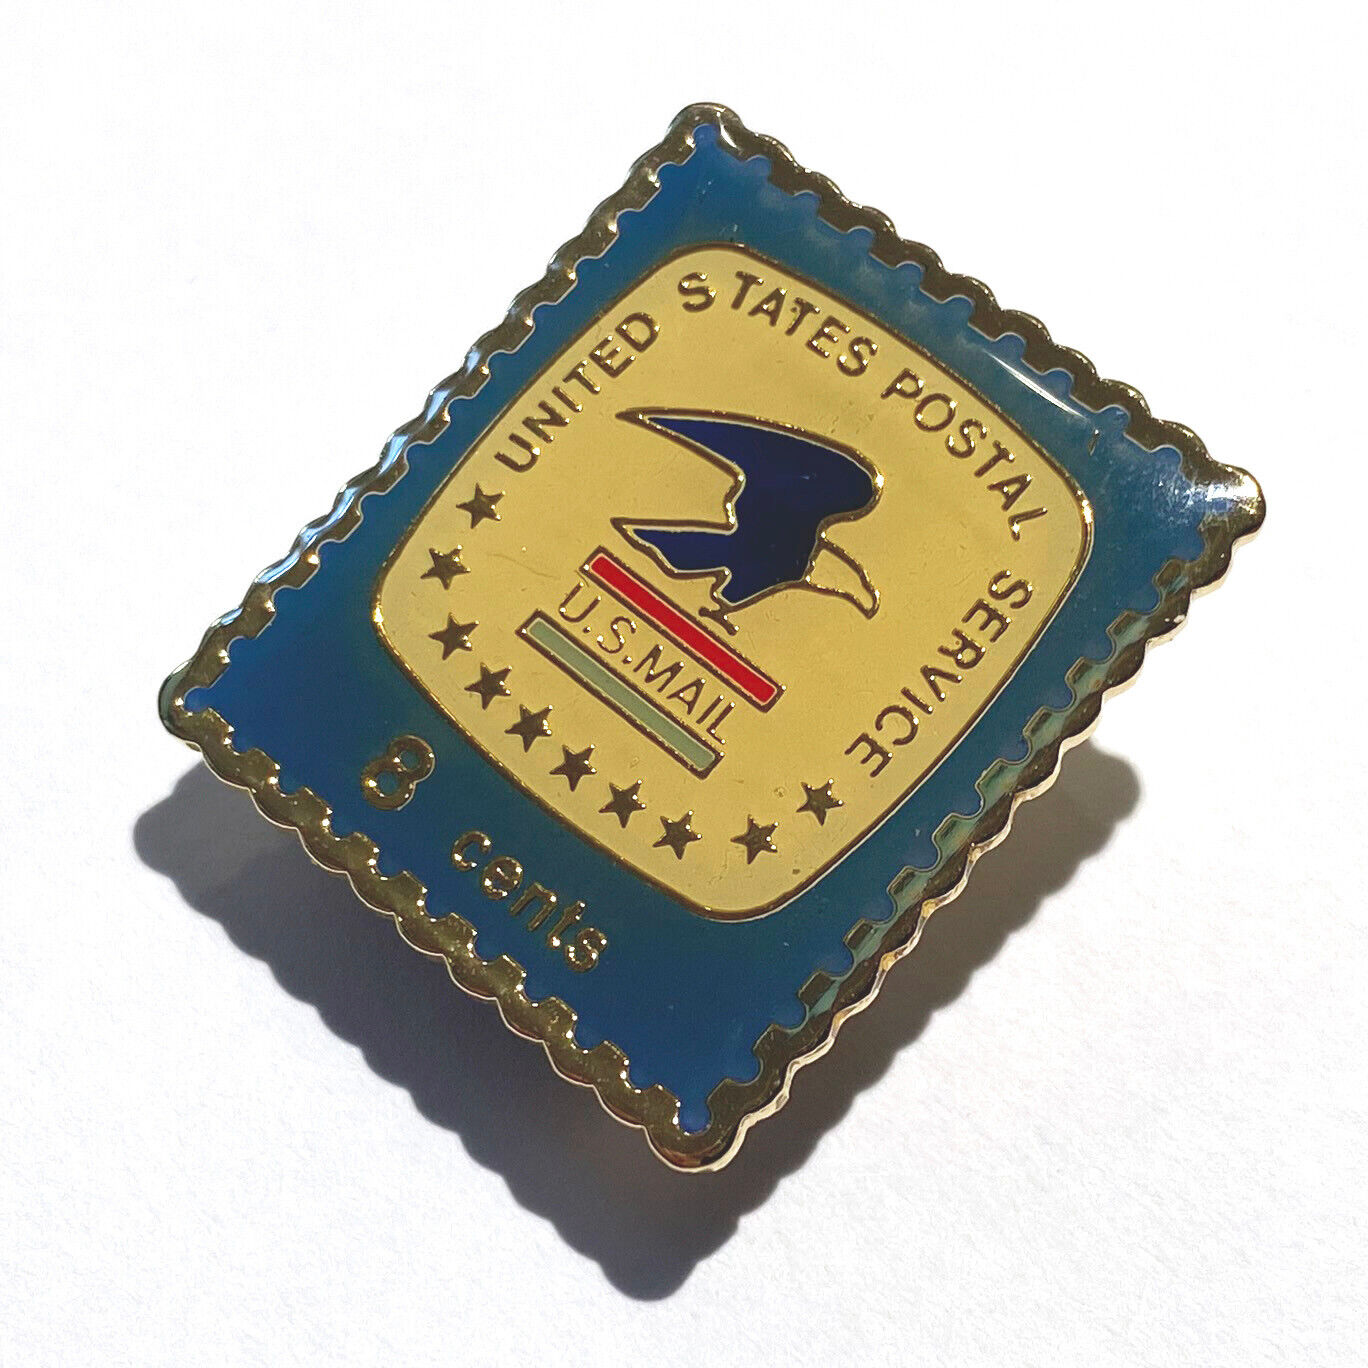 USPS Vintage 70s 80s Postal Service Emblem 8c Stamp Collectible Enamel Pin